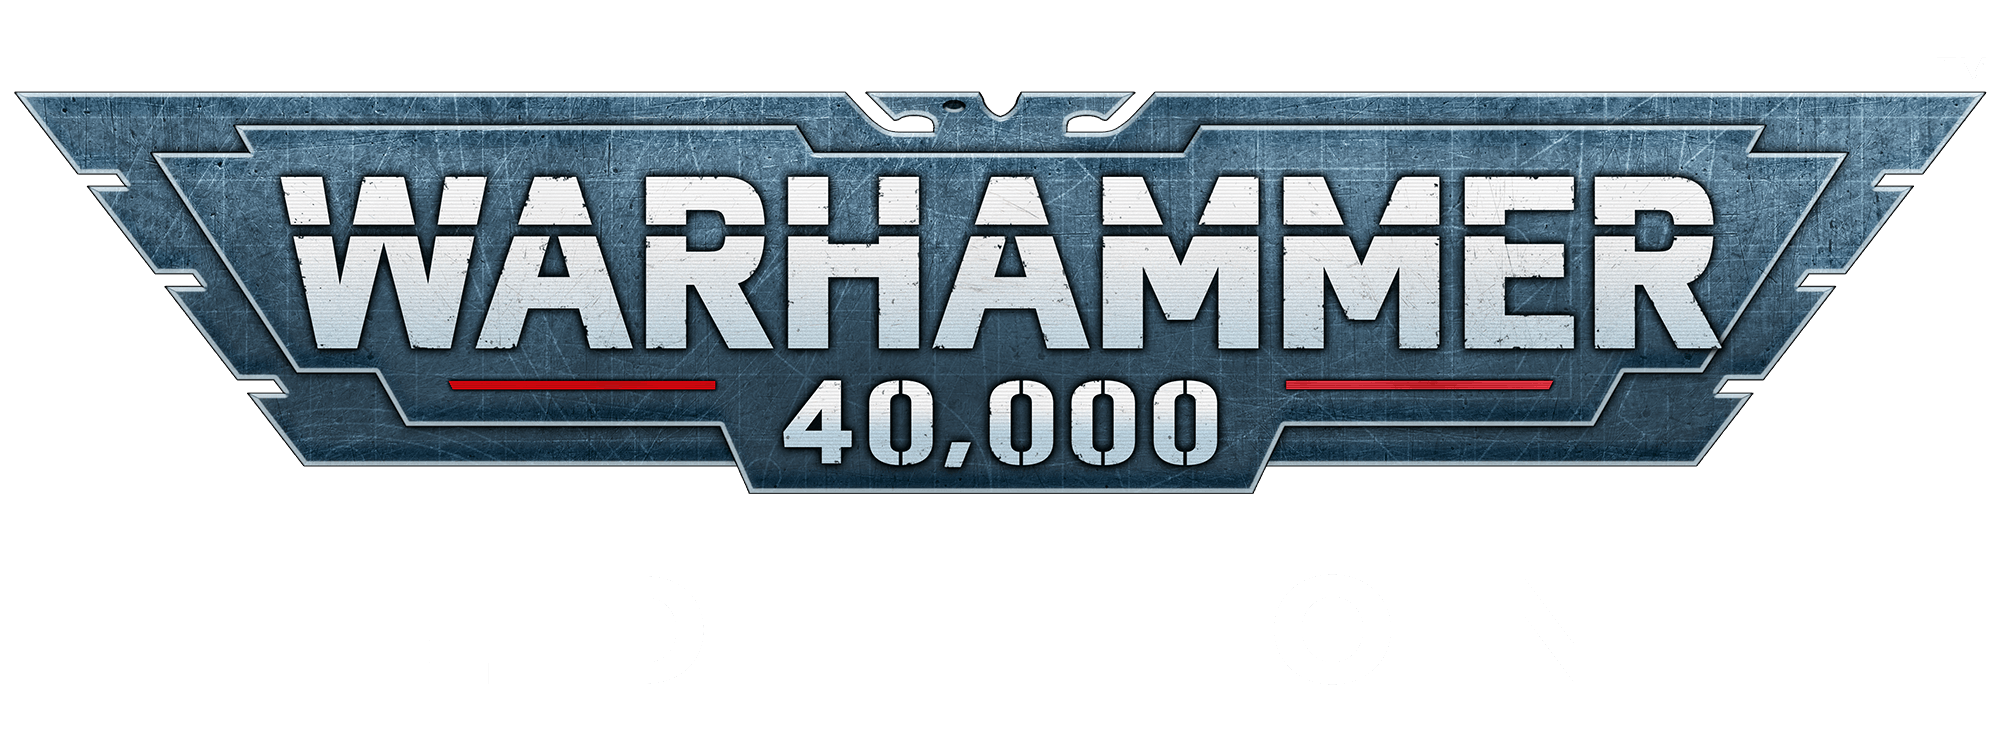 noblechairs HERO Warhammer 40,000 Edition title logo